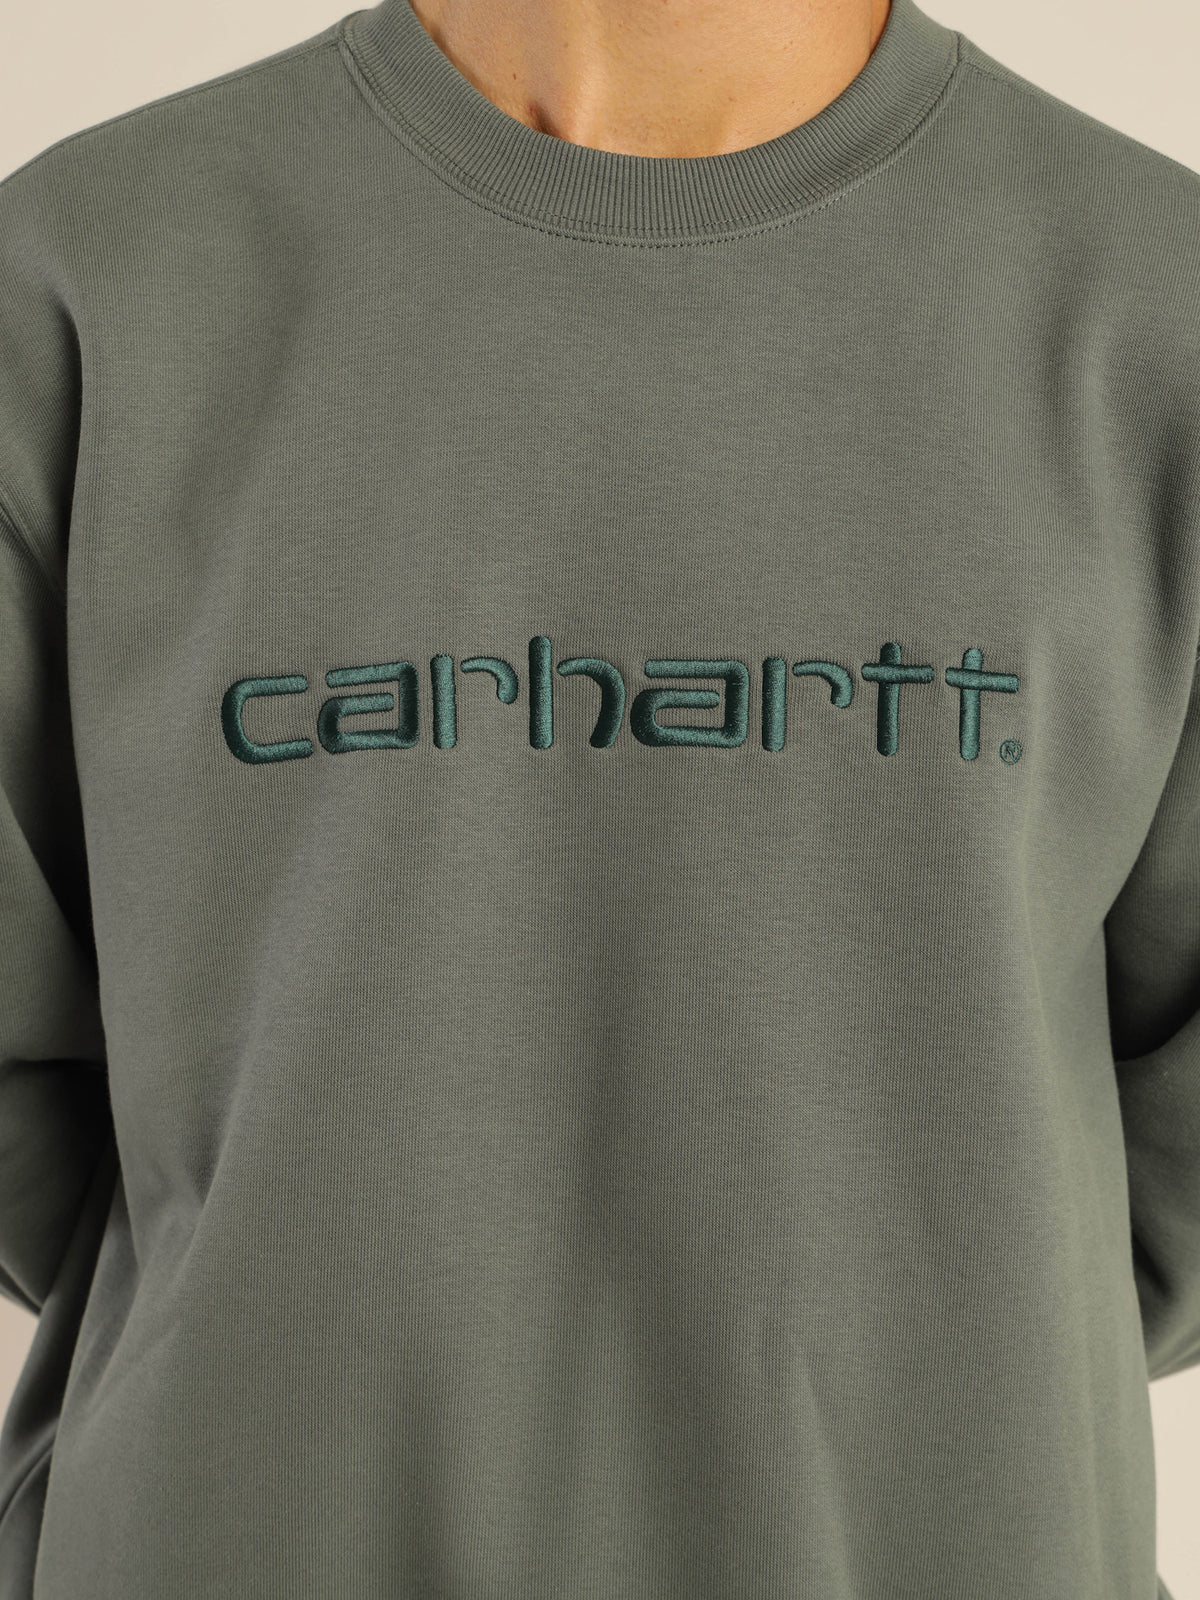 Carhartt Sweatshirt in Eucalyptus